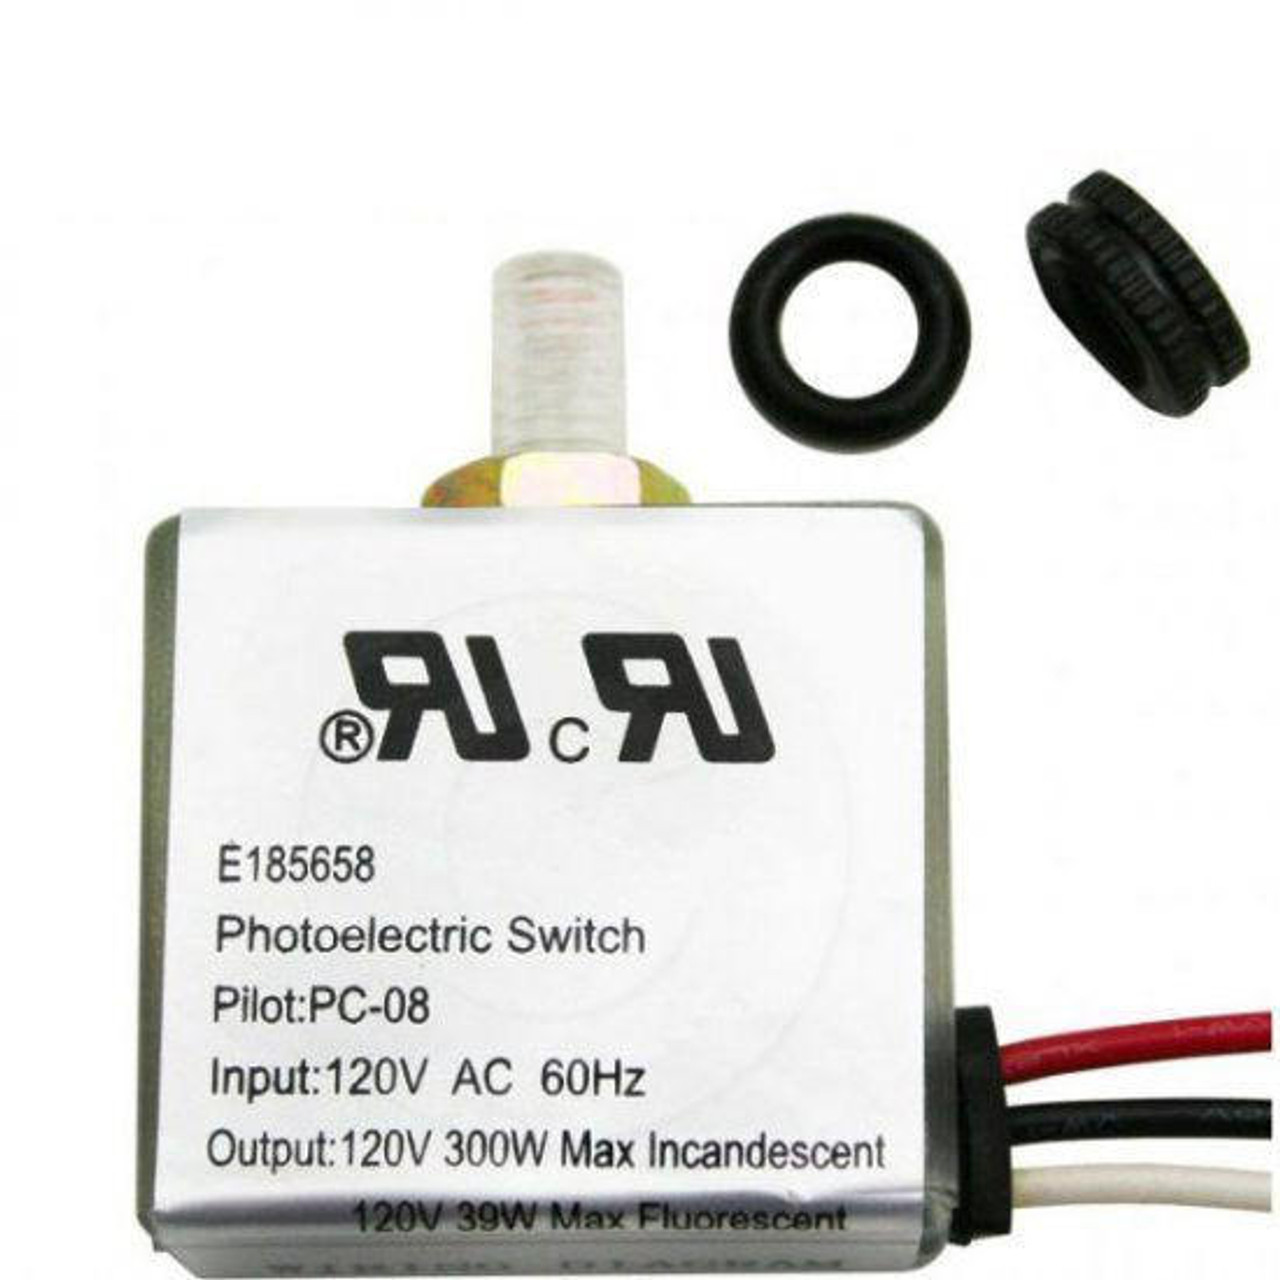 Pilot PC-08 E185658 Photoelectric Switch 120V Photocontrol